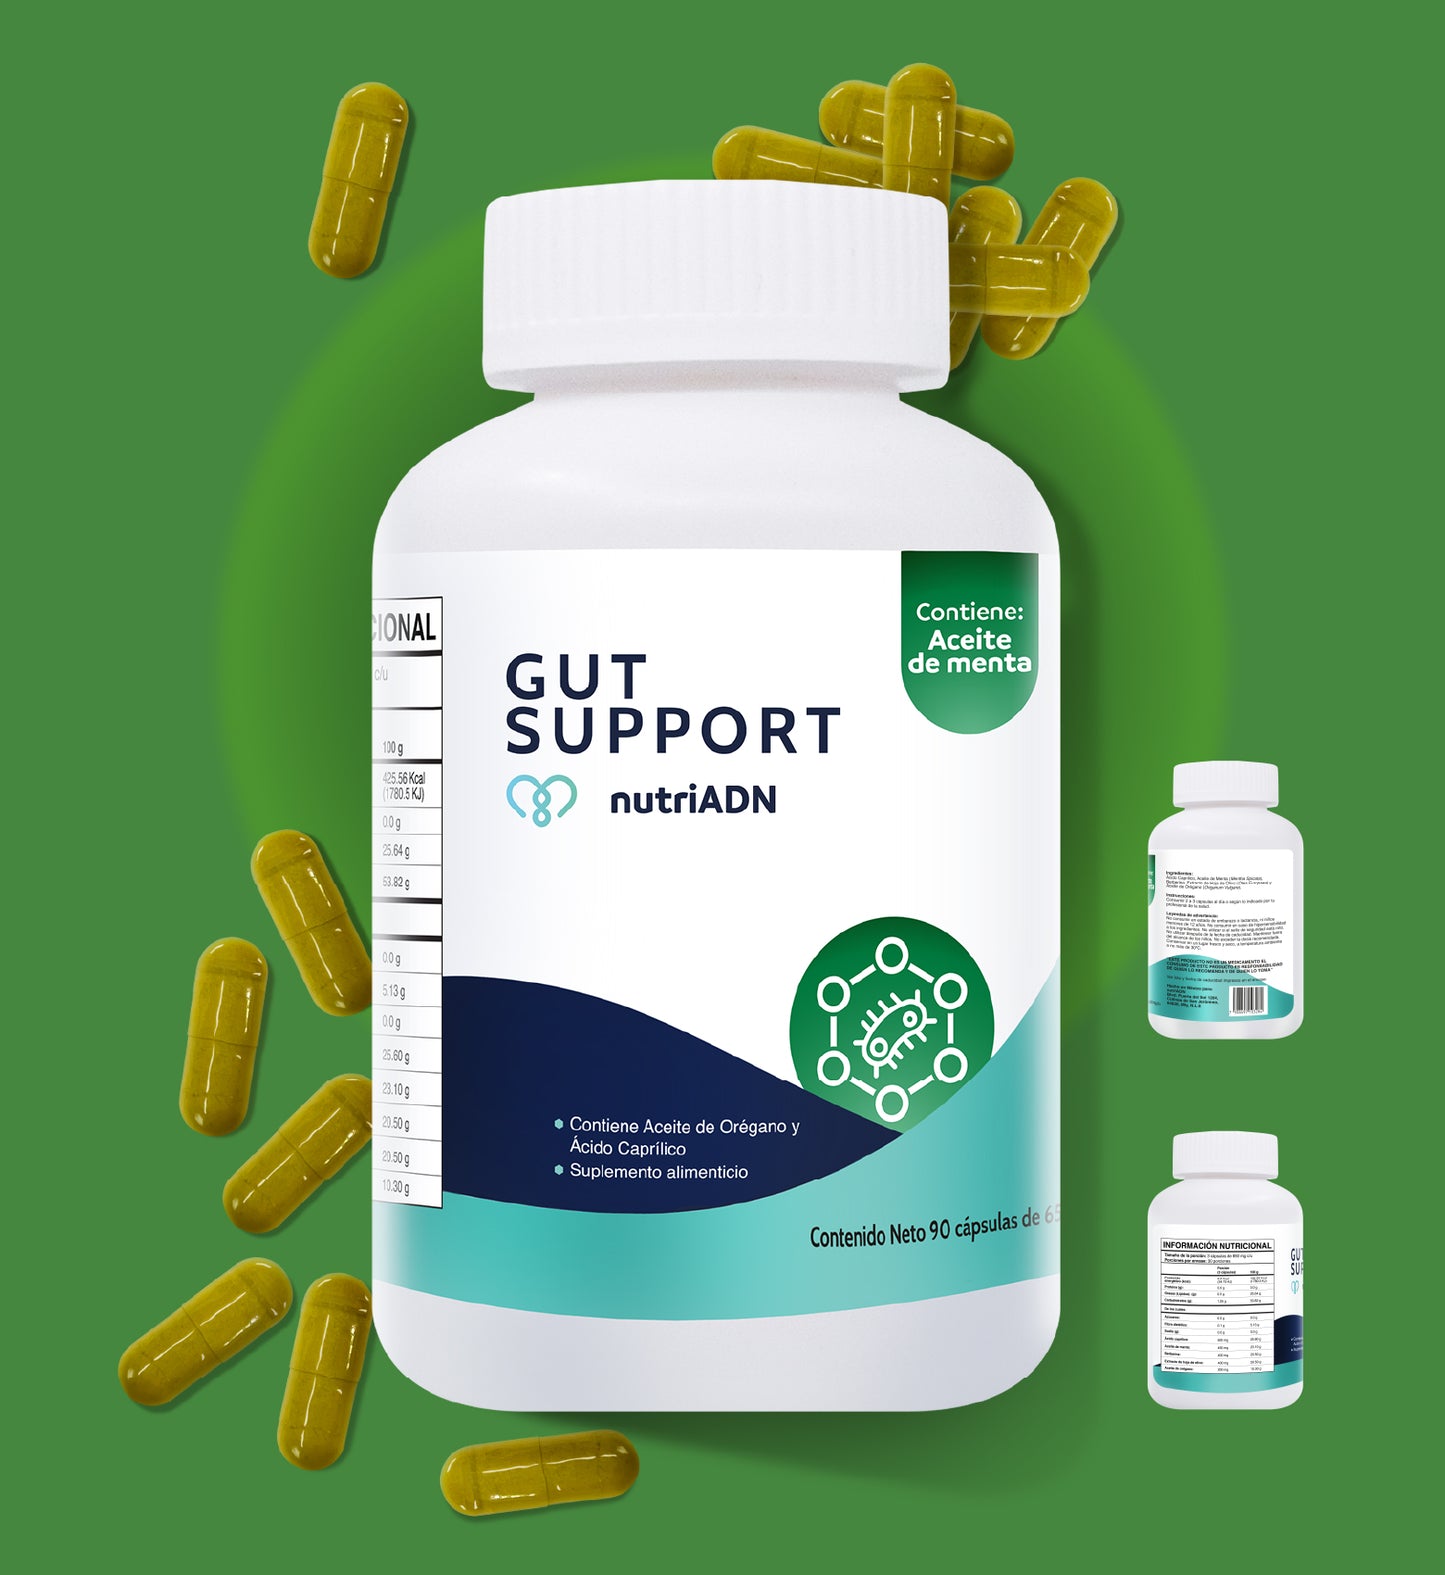 Gut Support by nutriADN